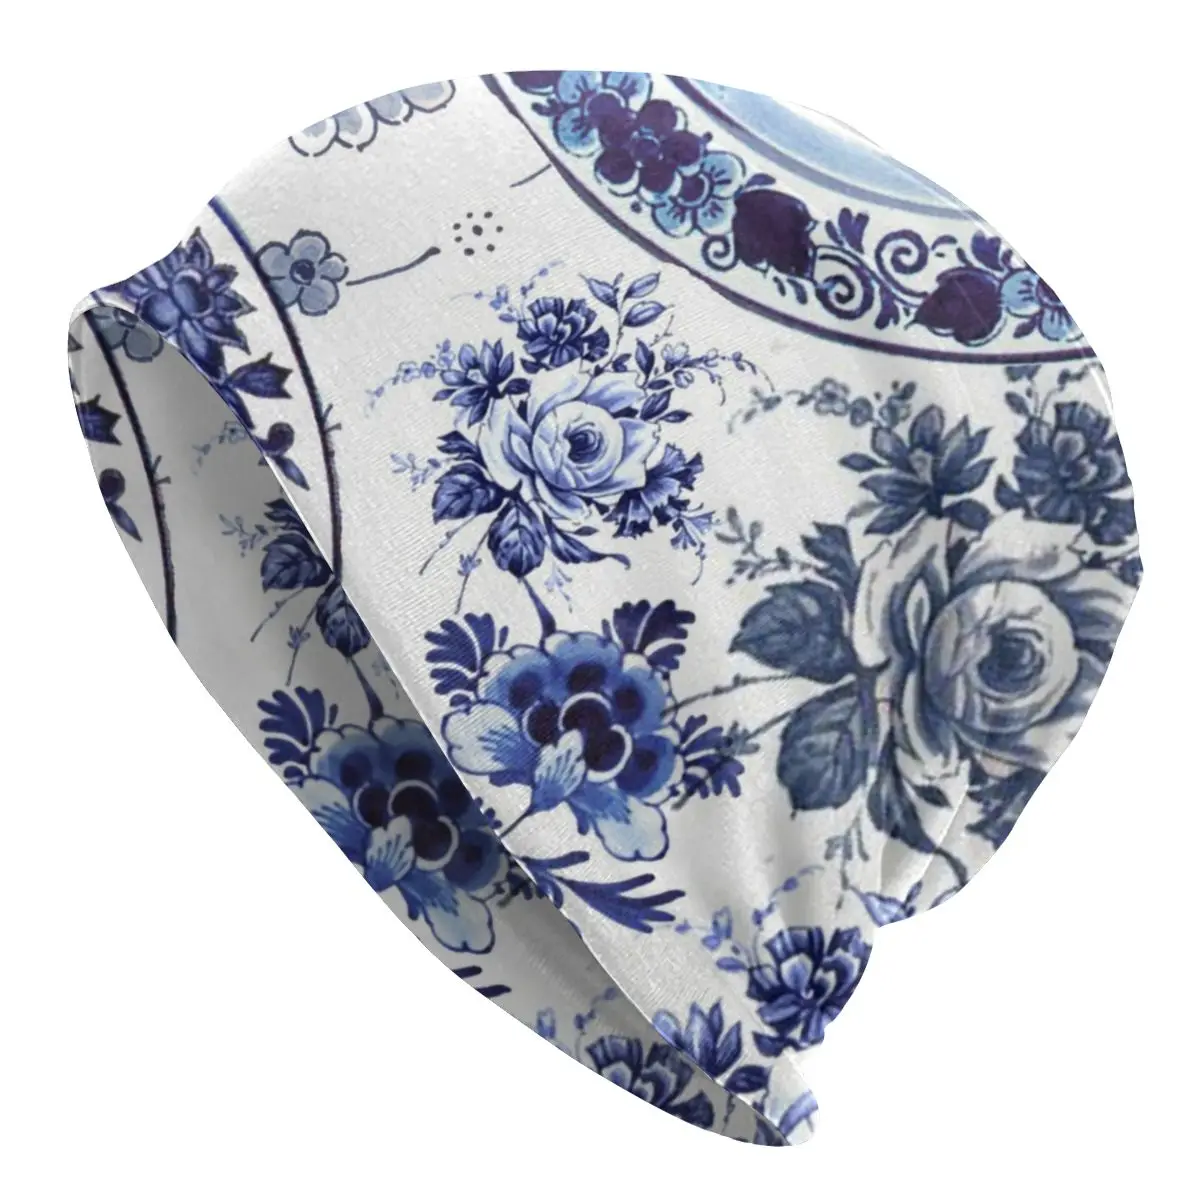 

Vintage Delft Blue Flowers Porcelain Print Beanie Winter Warm Skullies Beanies Hat Adult Oriental Floral Art Knitted Bonnet Cap